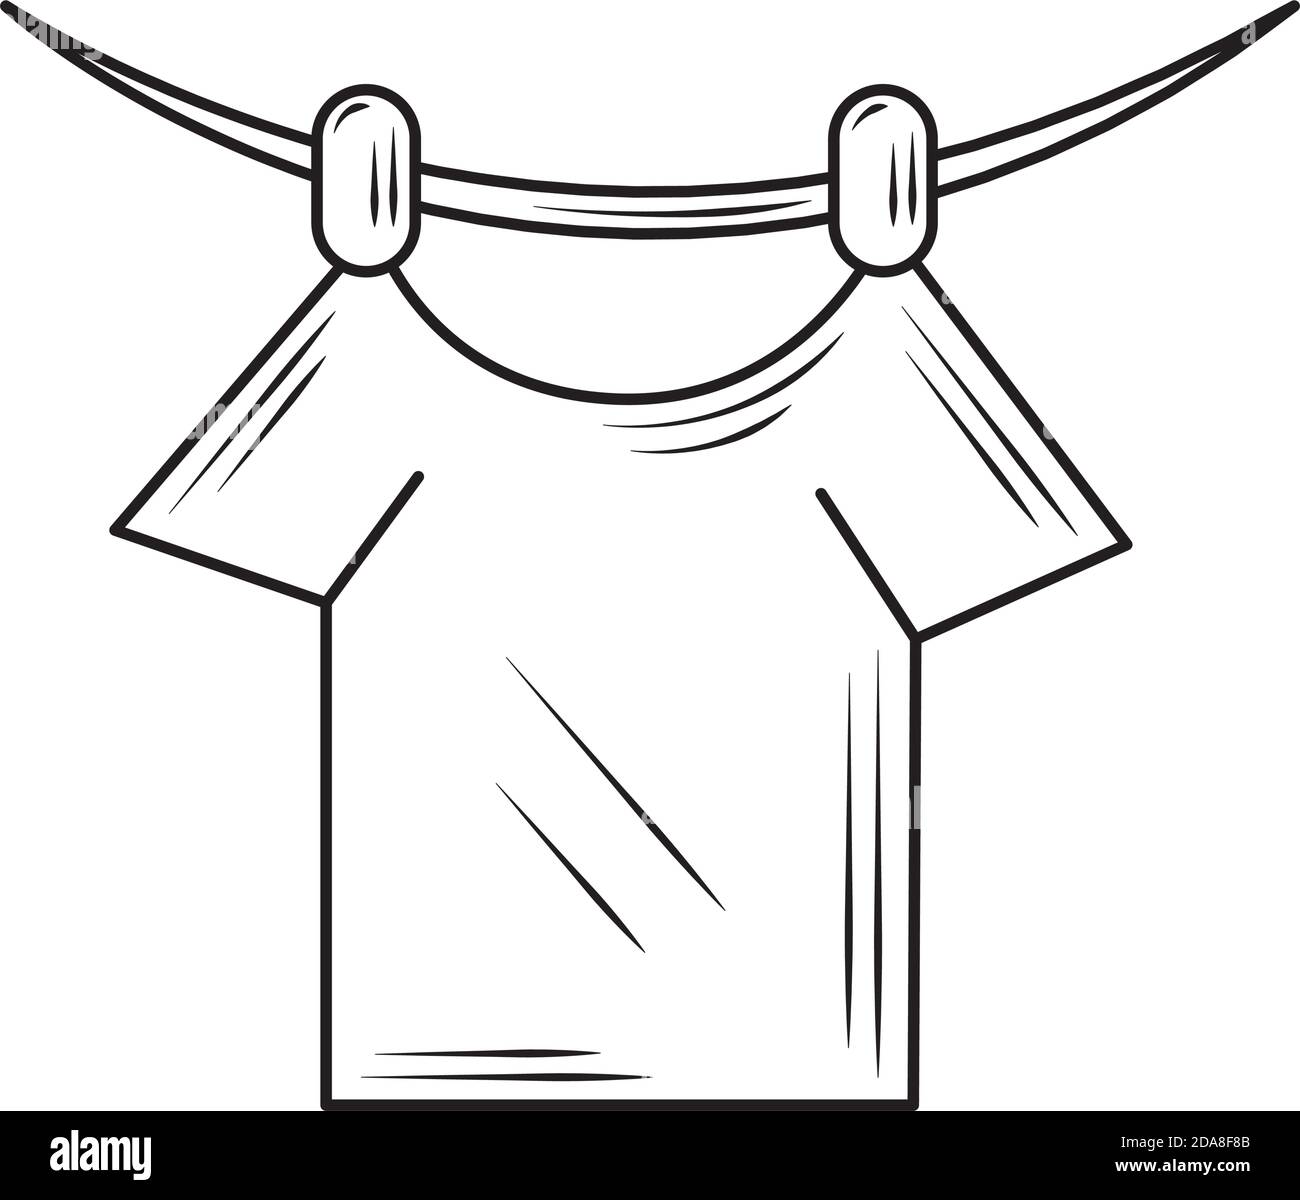 clothes line clip art black and white